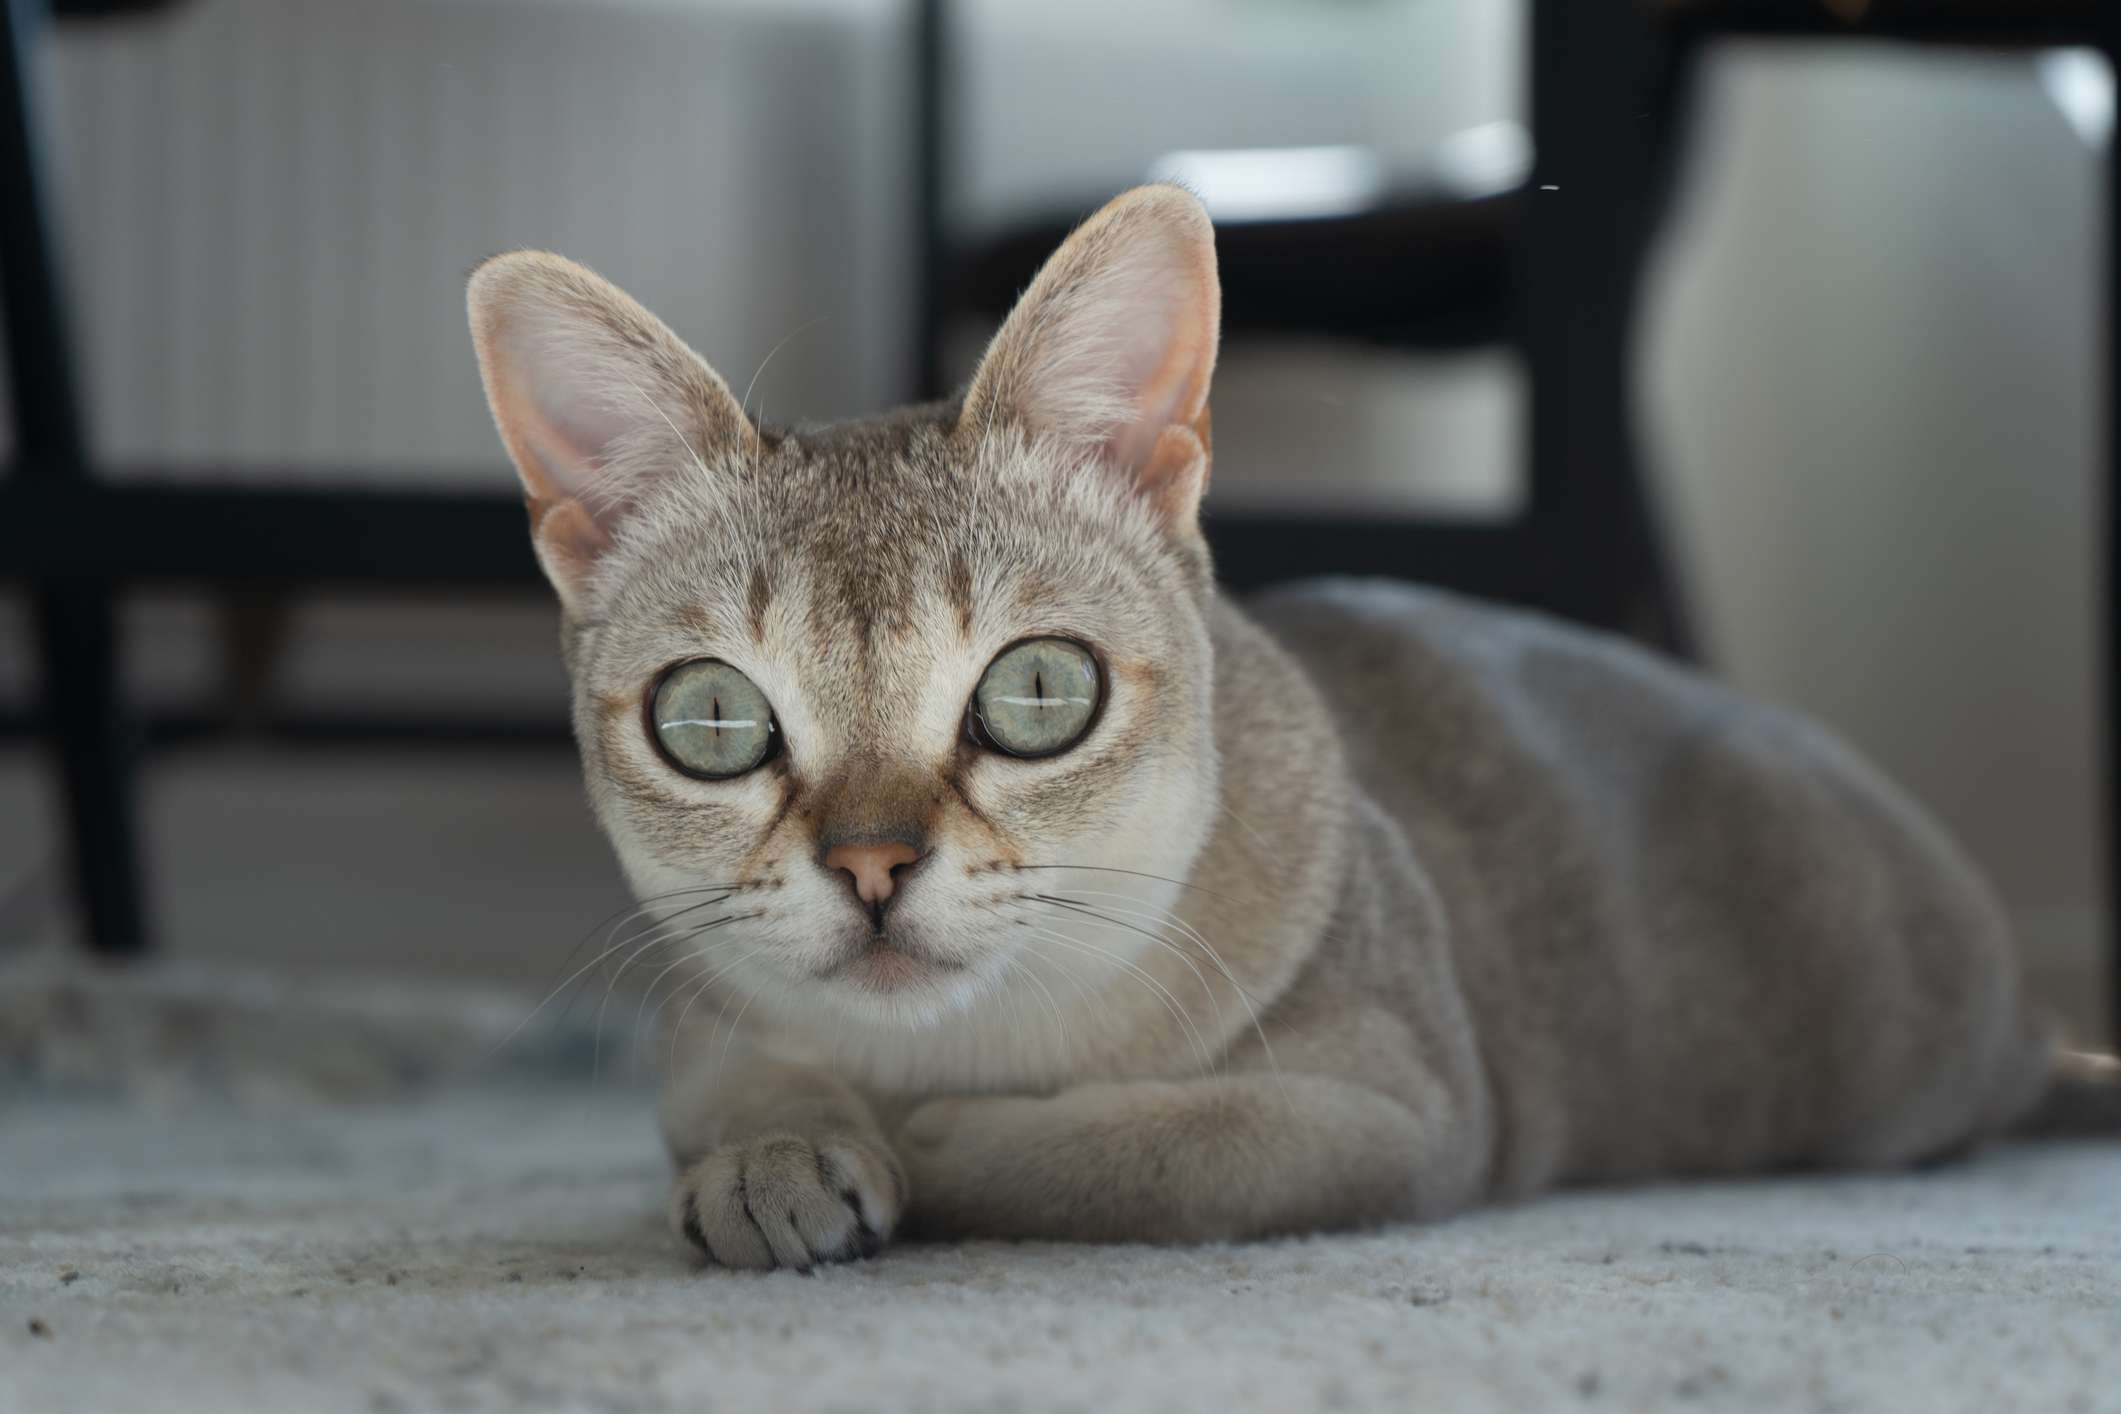 Singapura cat with big eyes